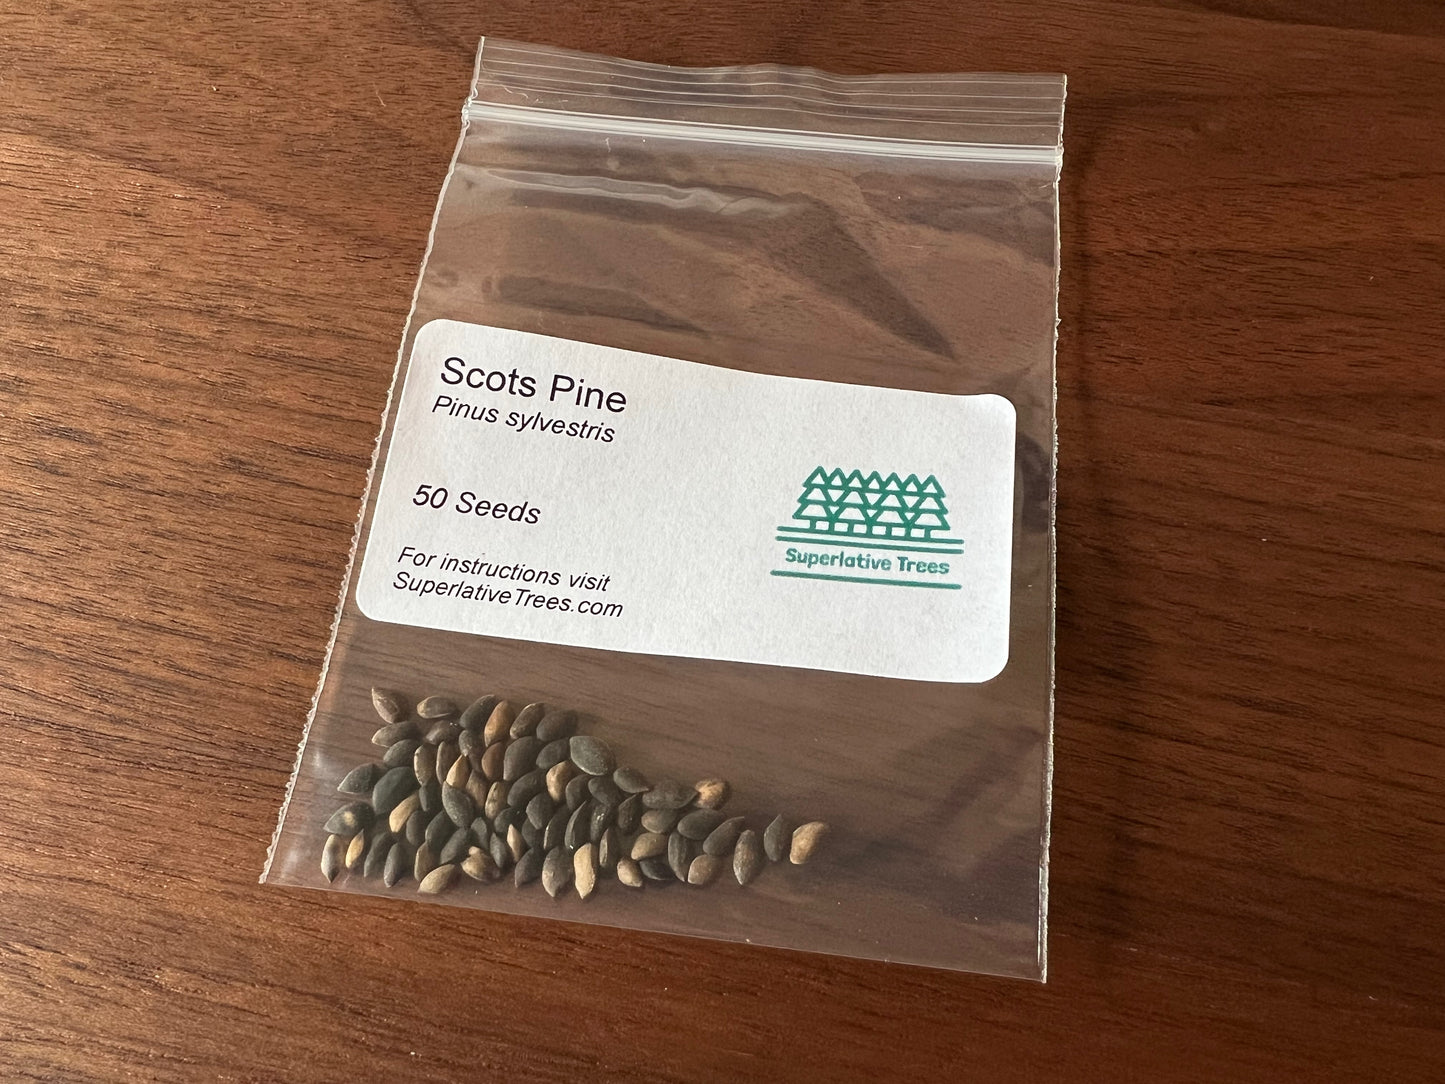 Scots Pine Seeds